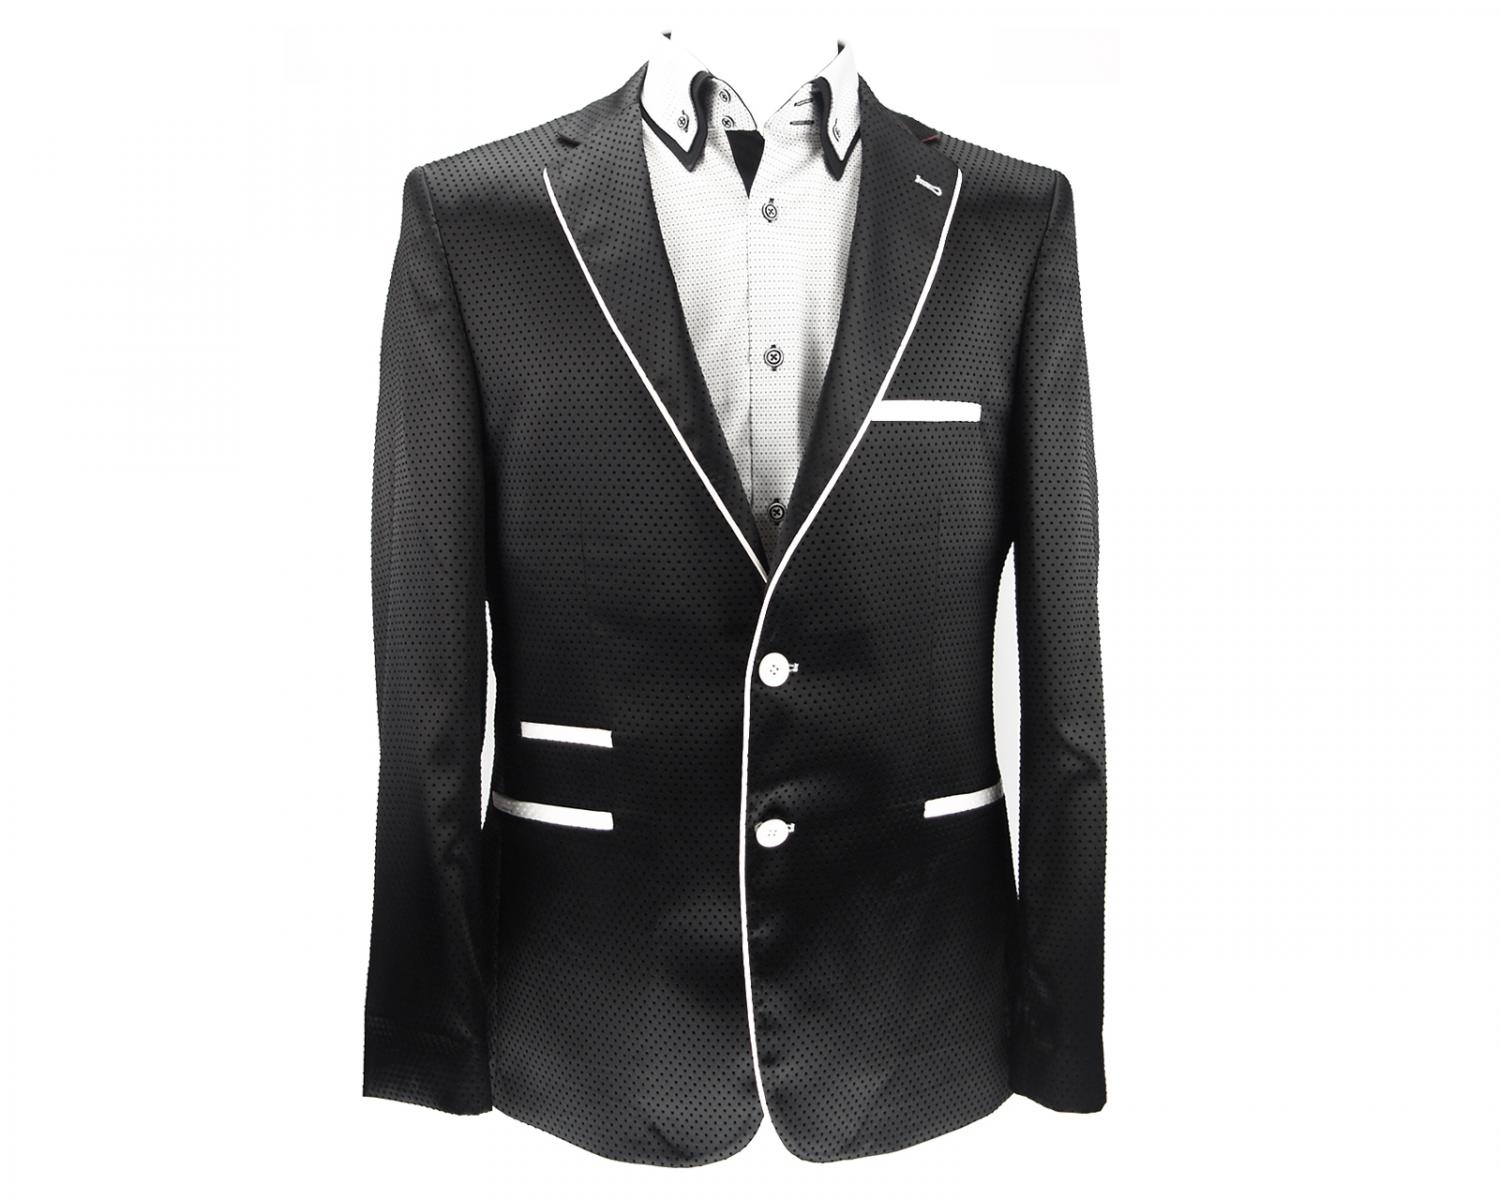 Men's black white polka dot blazer - Quality Designed Shirts